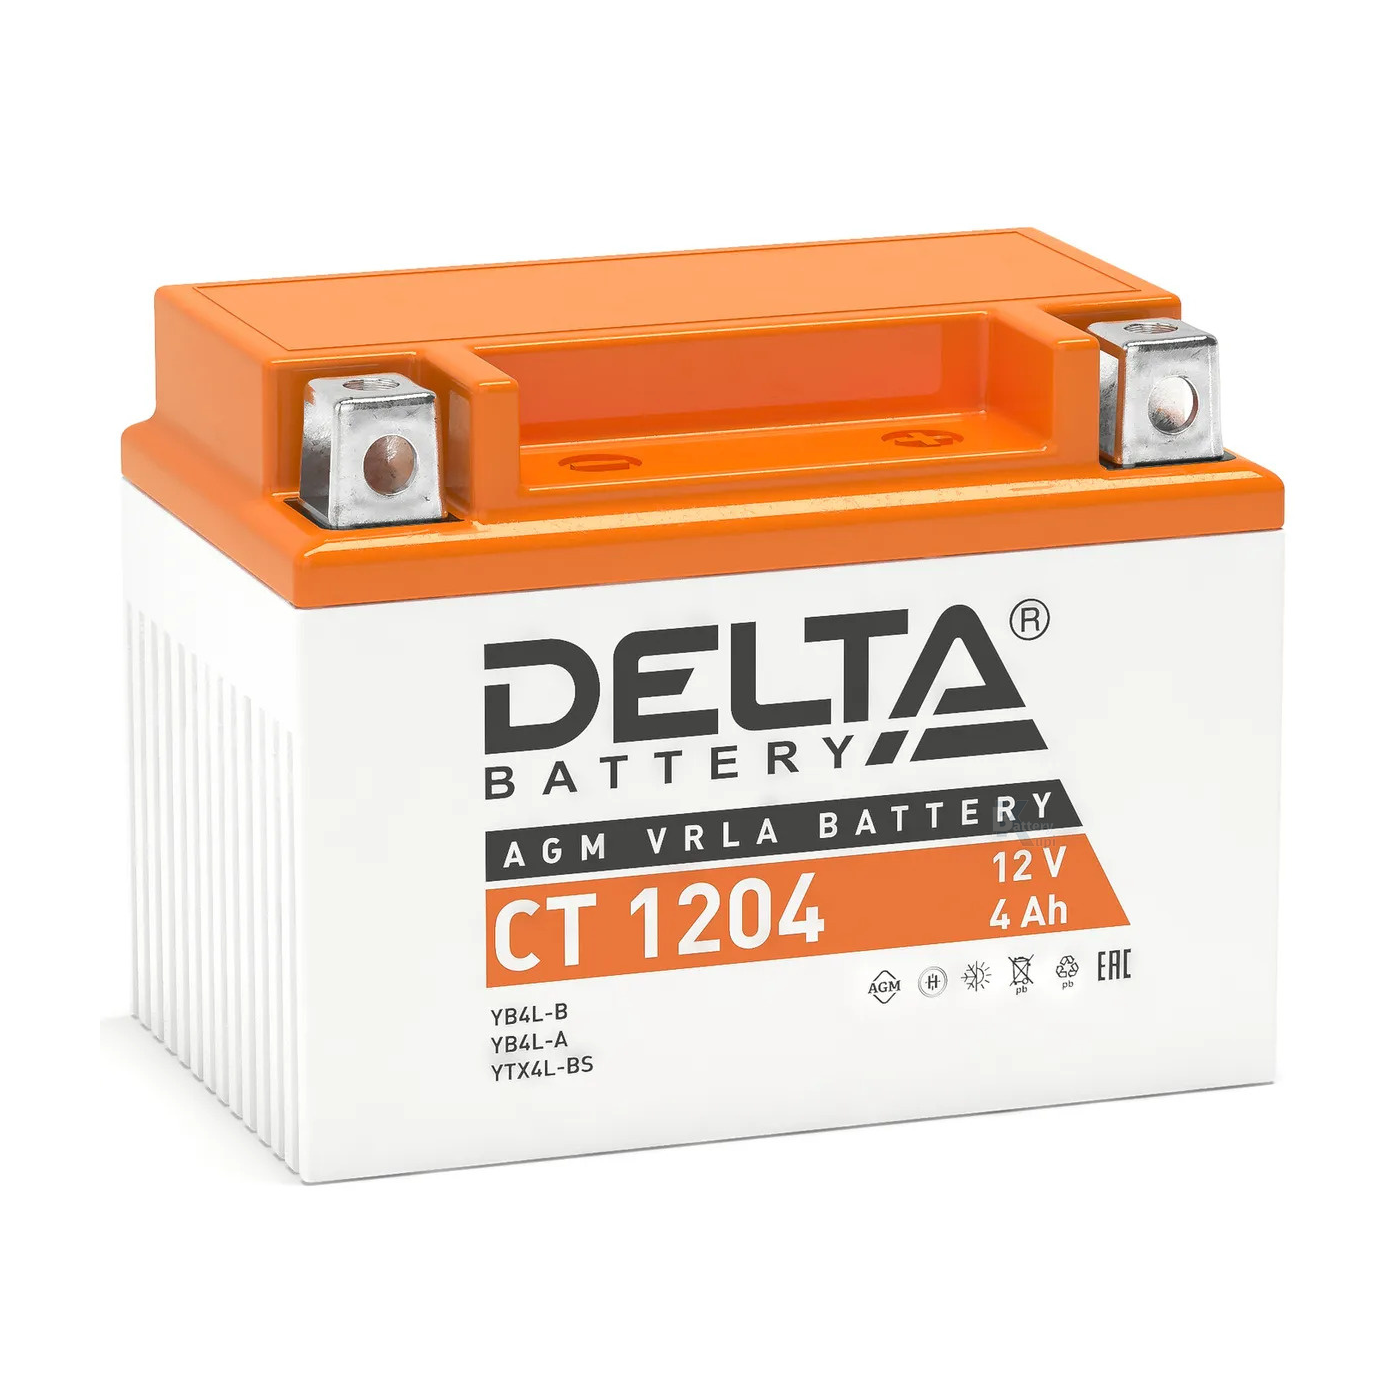 Battery ct. Аккумулятор Delta CT 1211. Мото аккумулятор Delta CT-1205. Delta CT 12/10 аккумуляторная батарея. АКБ Delta CT 1204 12 V (4ah).